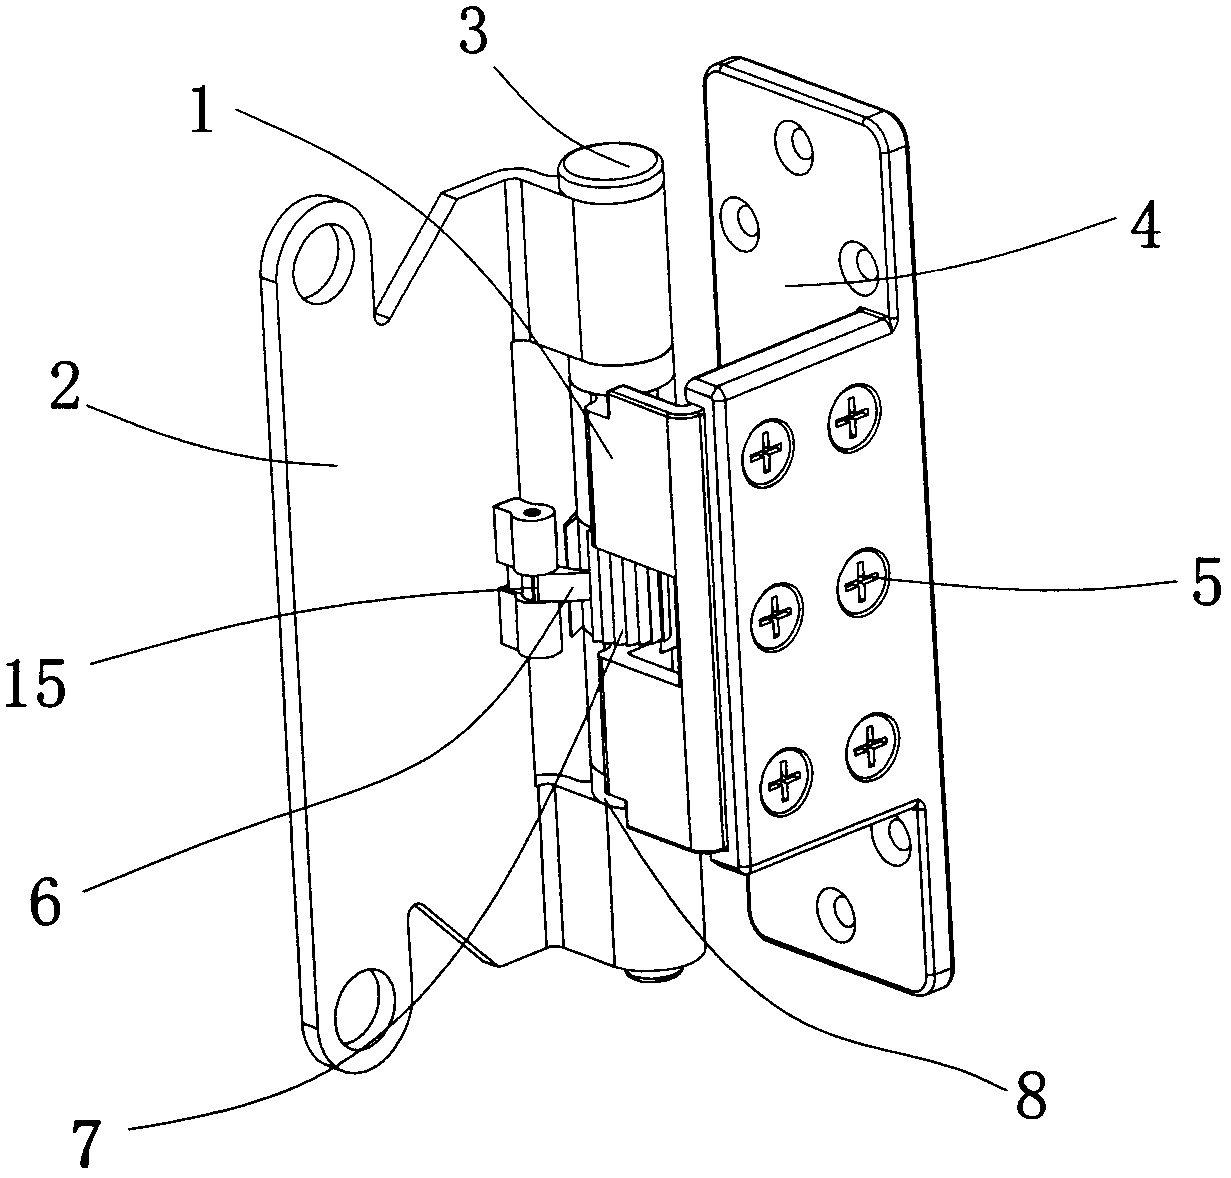 Magnetic ratchet hinge structure